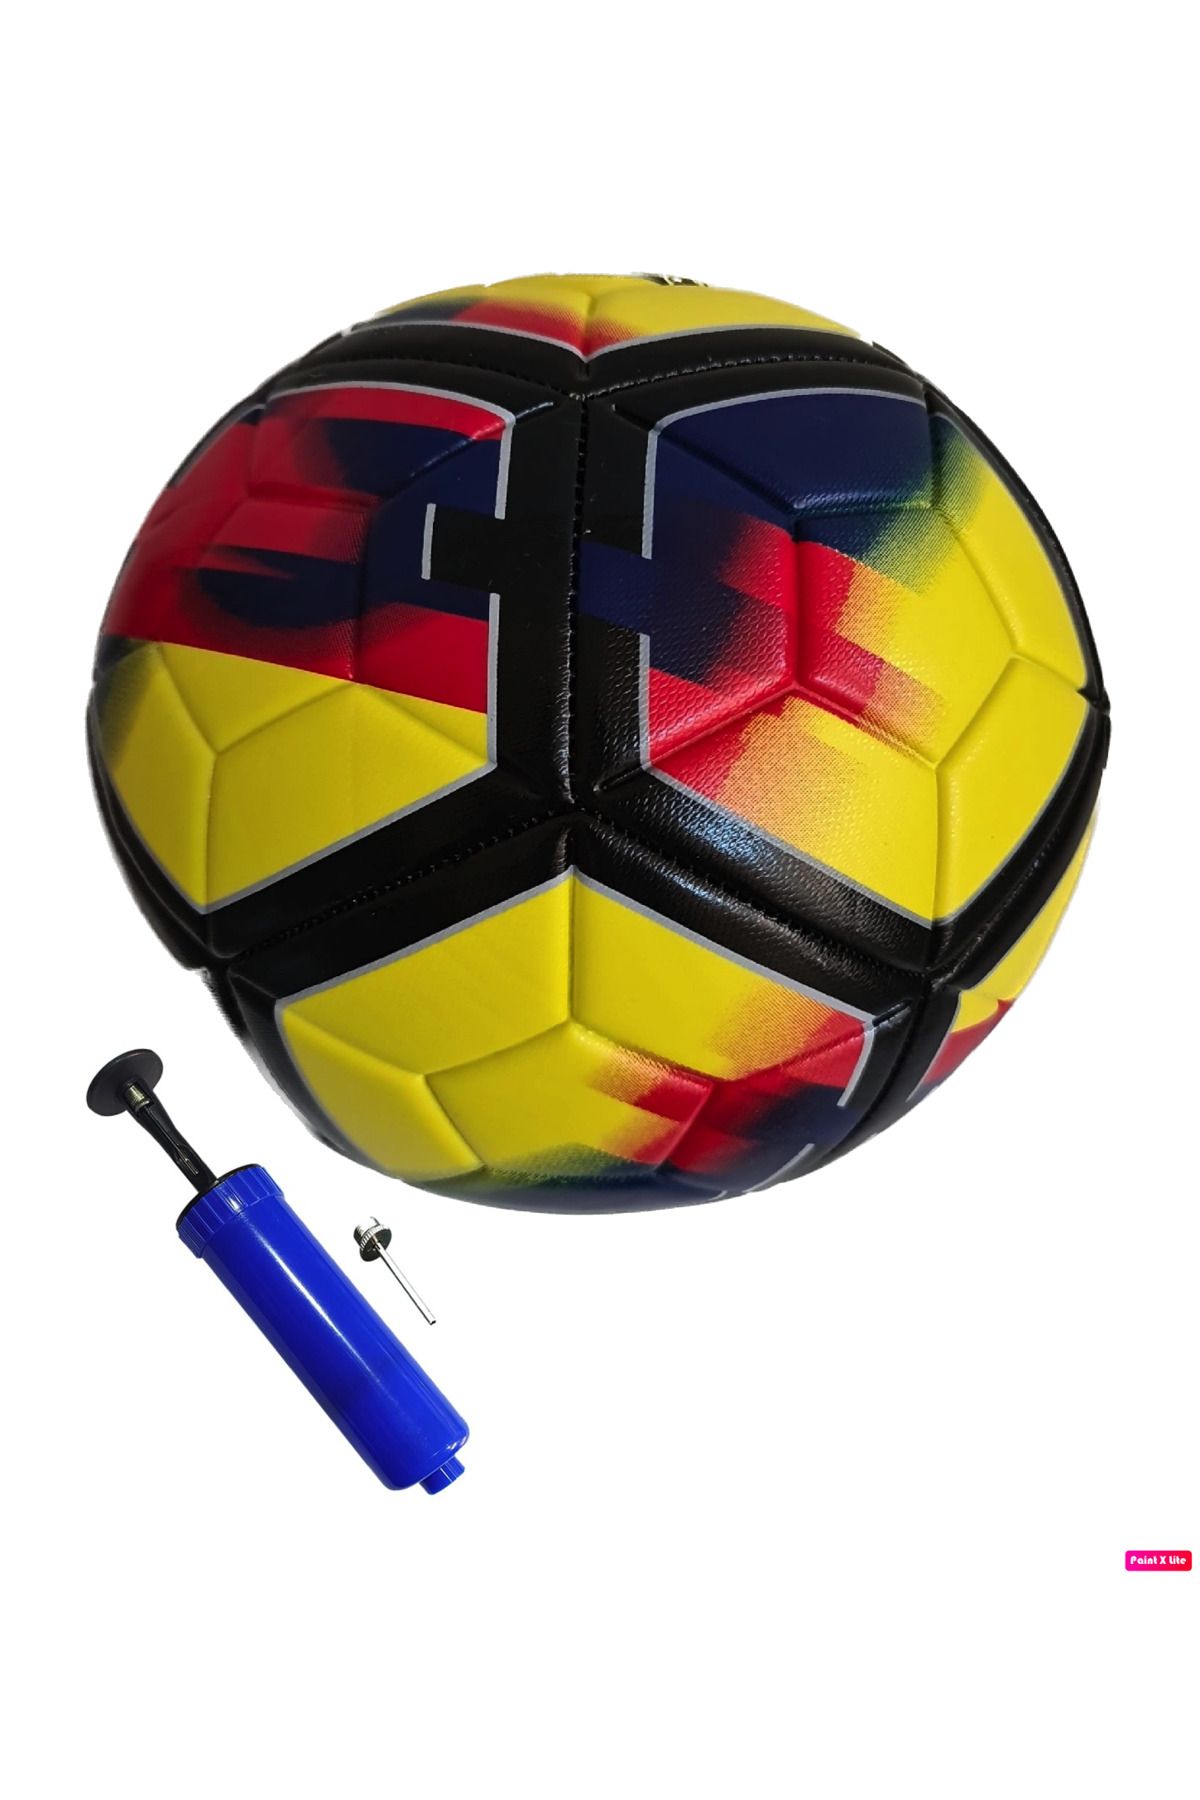 keufman Ft-200 %100 Orijinal Futbol Topu Pompa Hediyeli Sert Zemin Halı Saha 4 Astar Futbol Topu